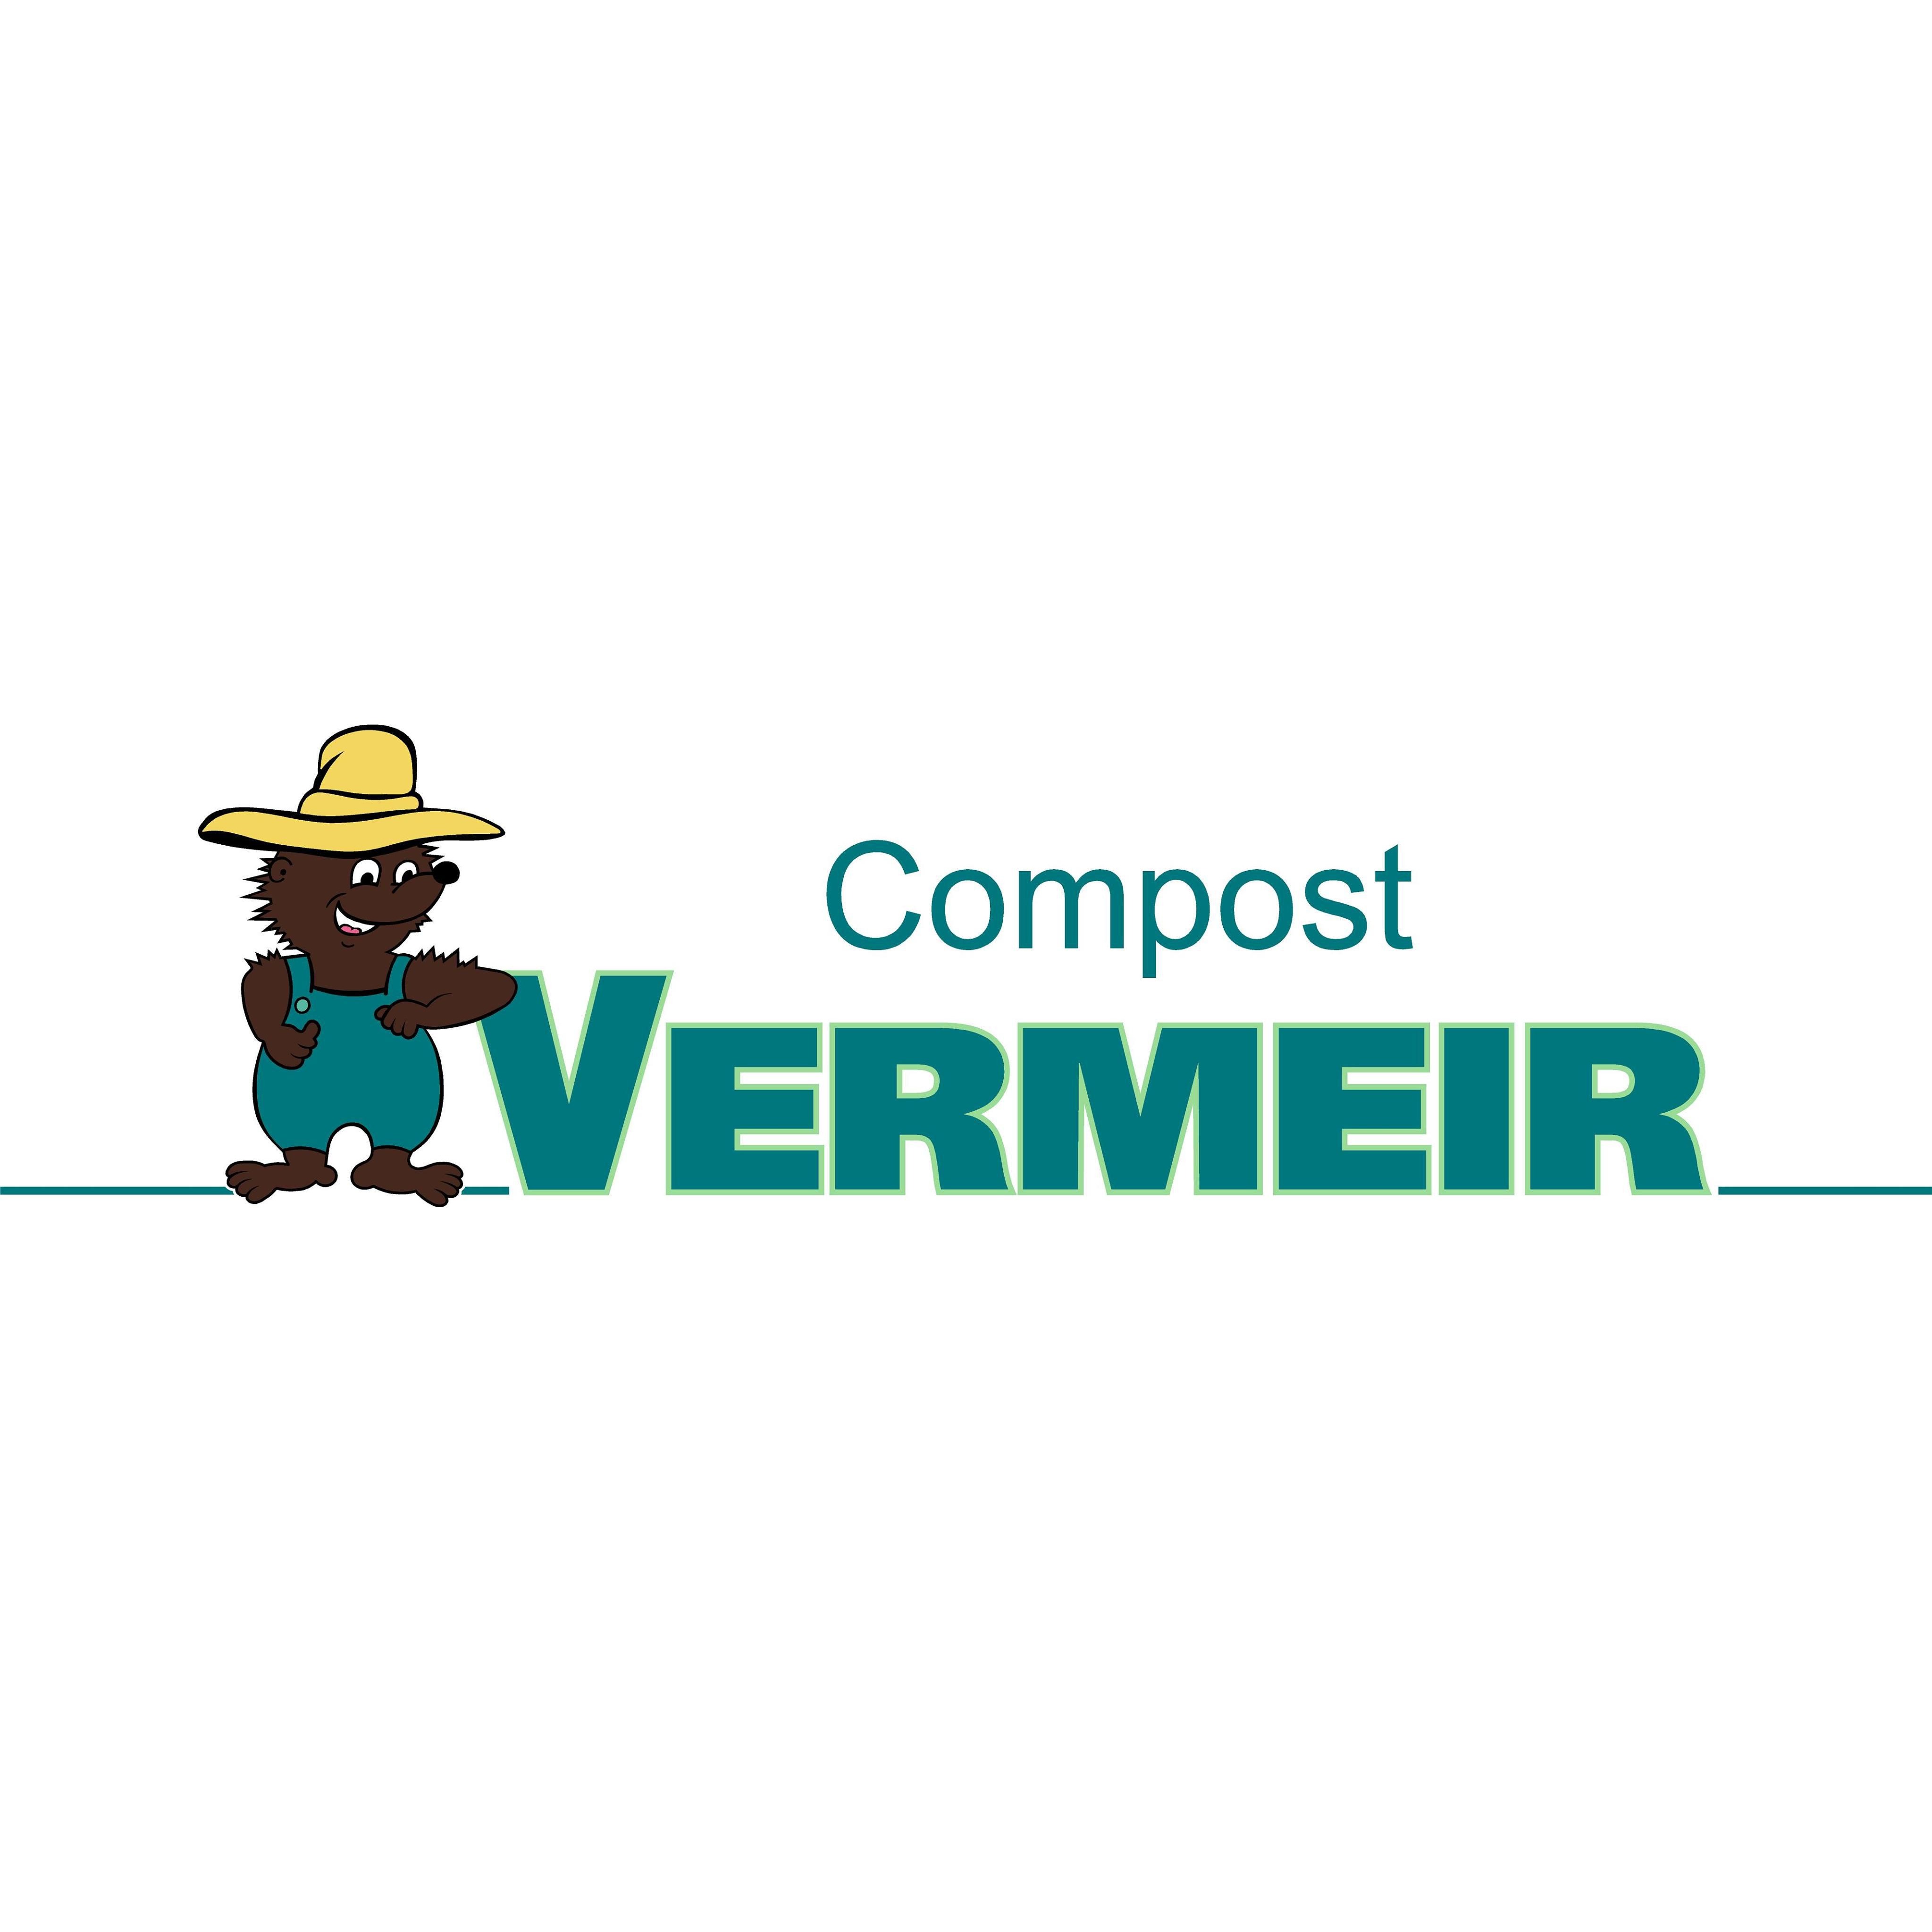 Compost Vermeir Logo